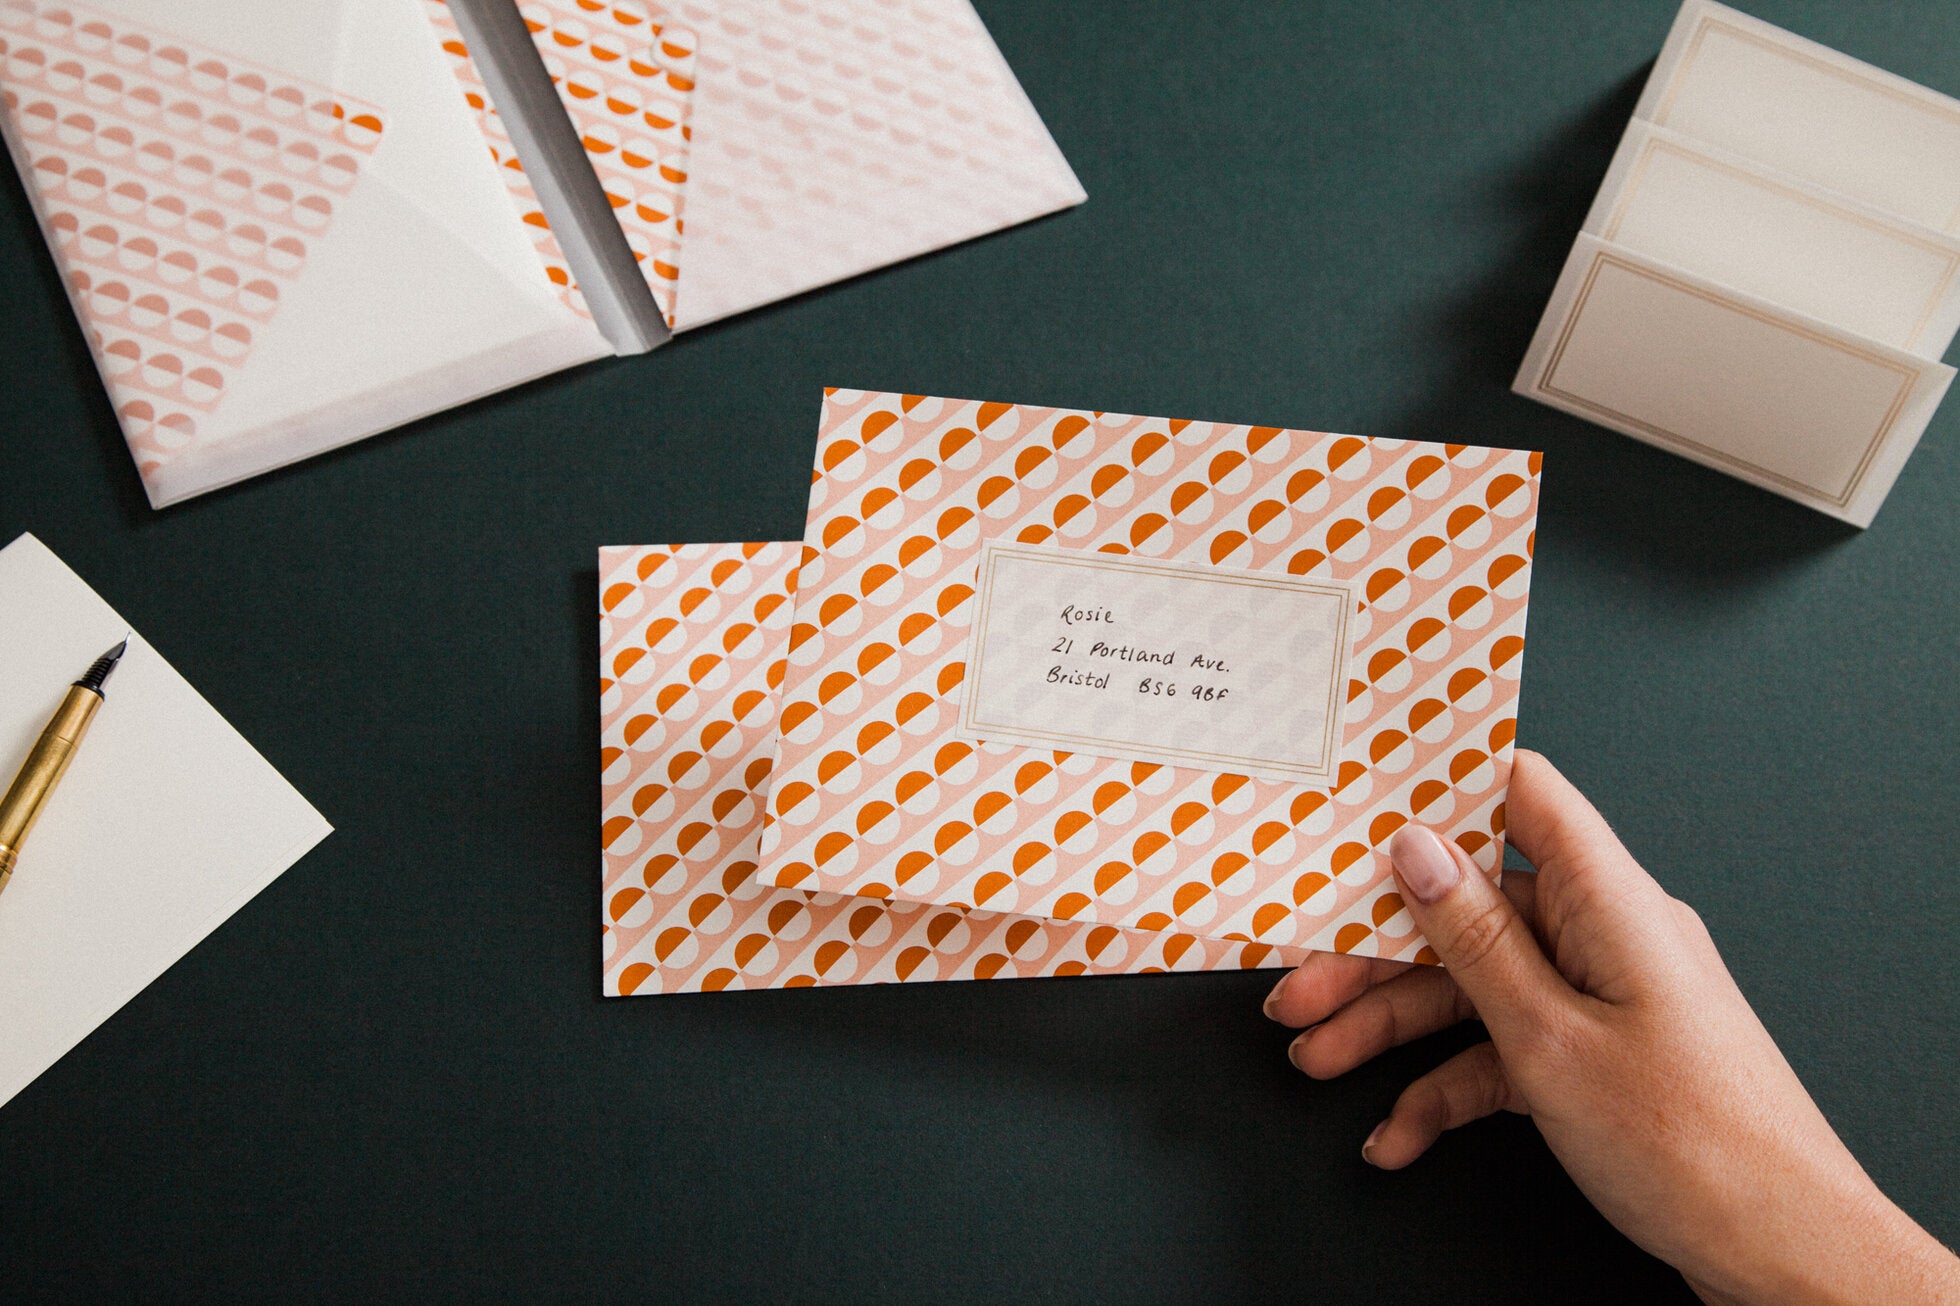 Letter Writing Set | Sophie Print | Pink / Orange | by Ola - Lifestory - ola